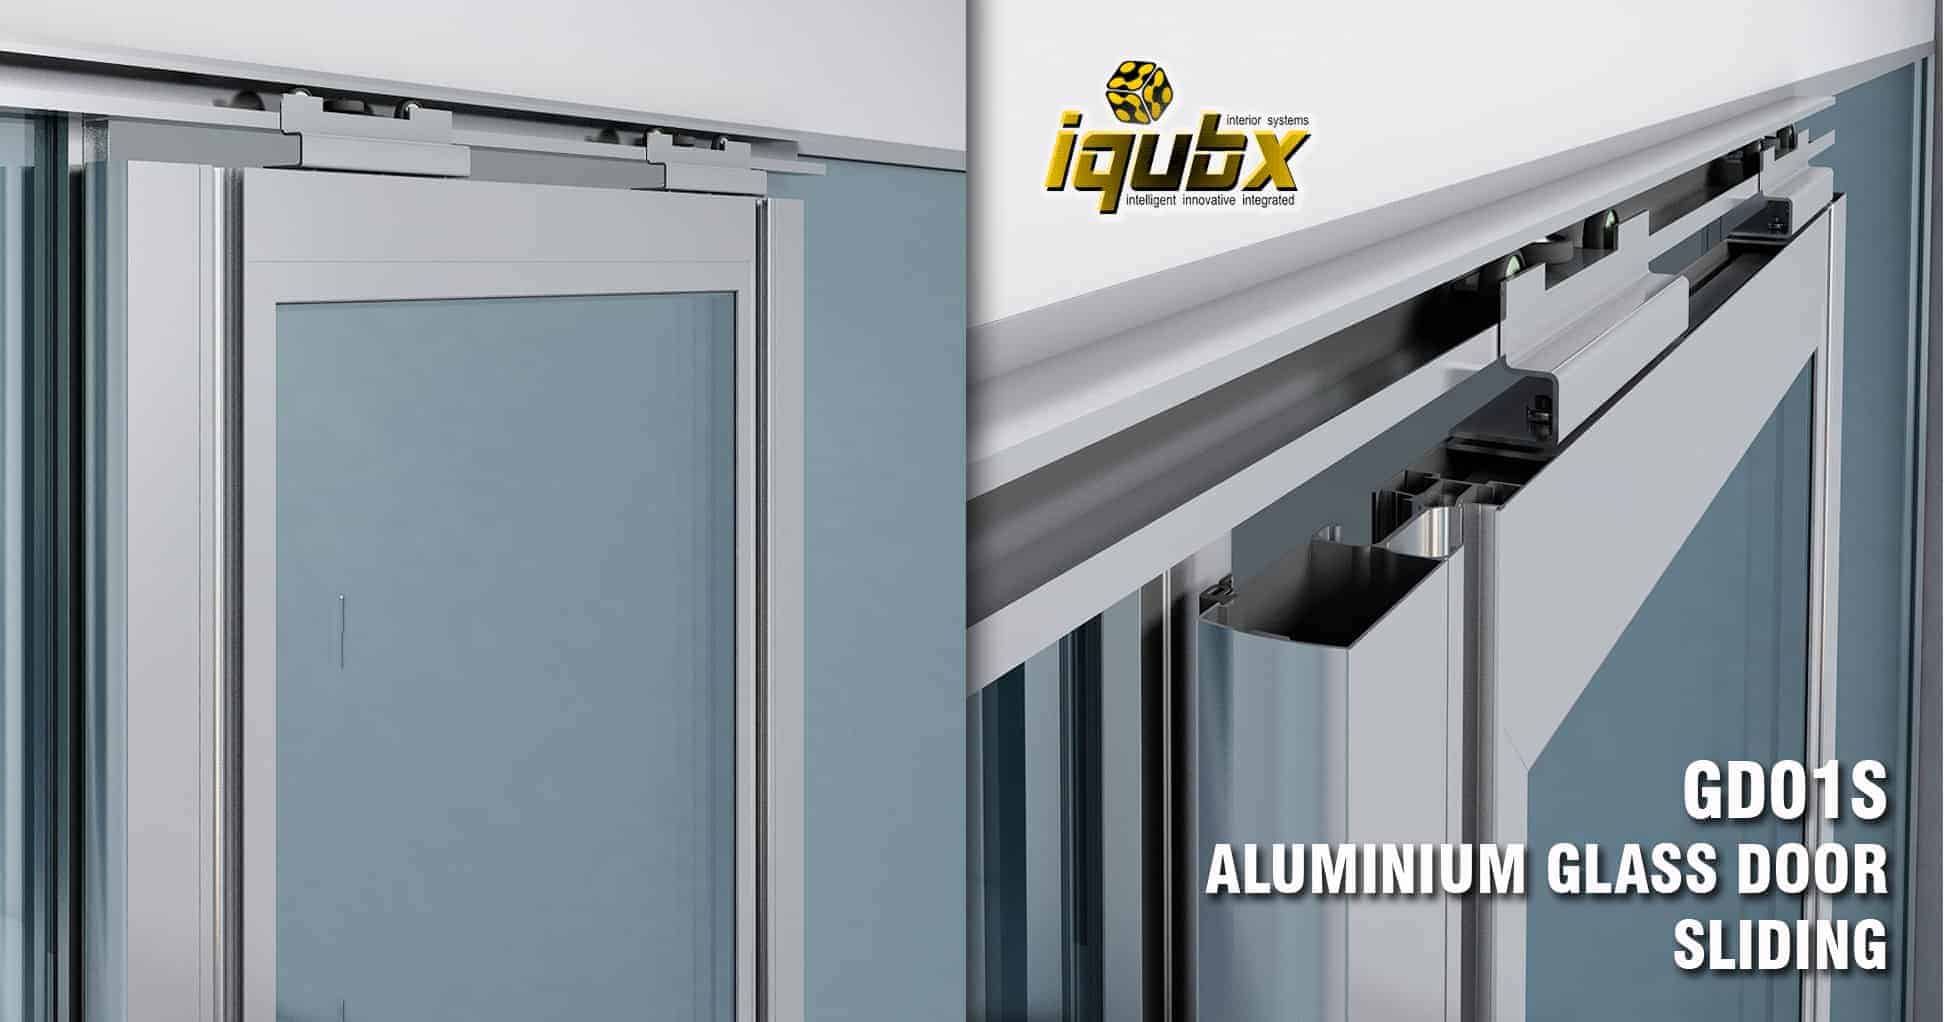 IQUBX aluminum glass door sliding